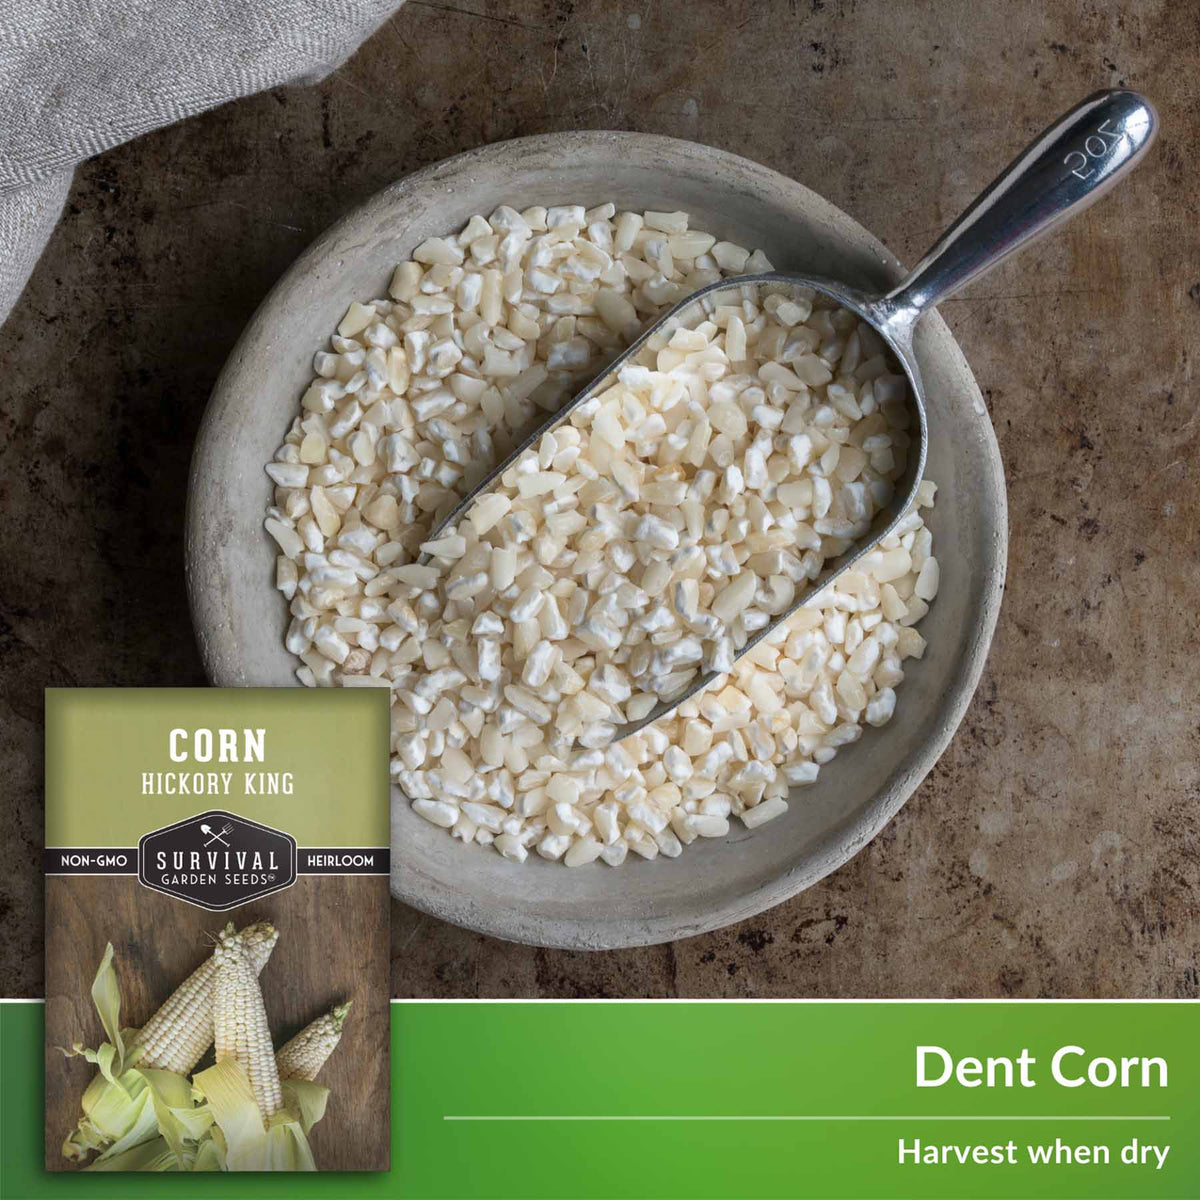 Dent corn